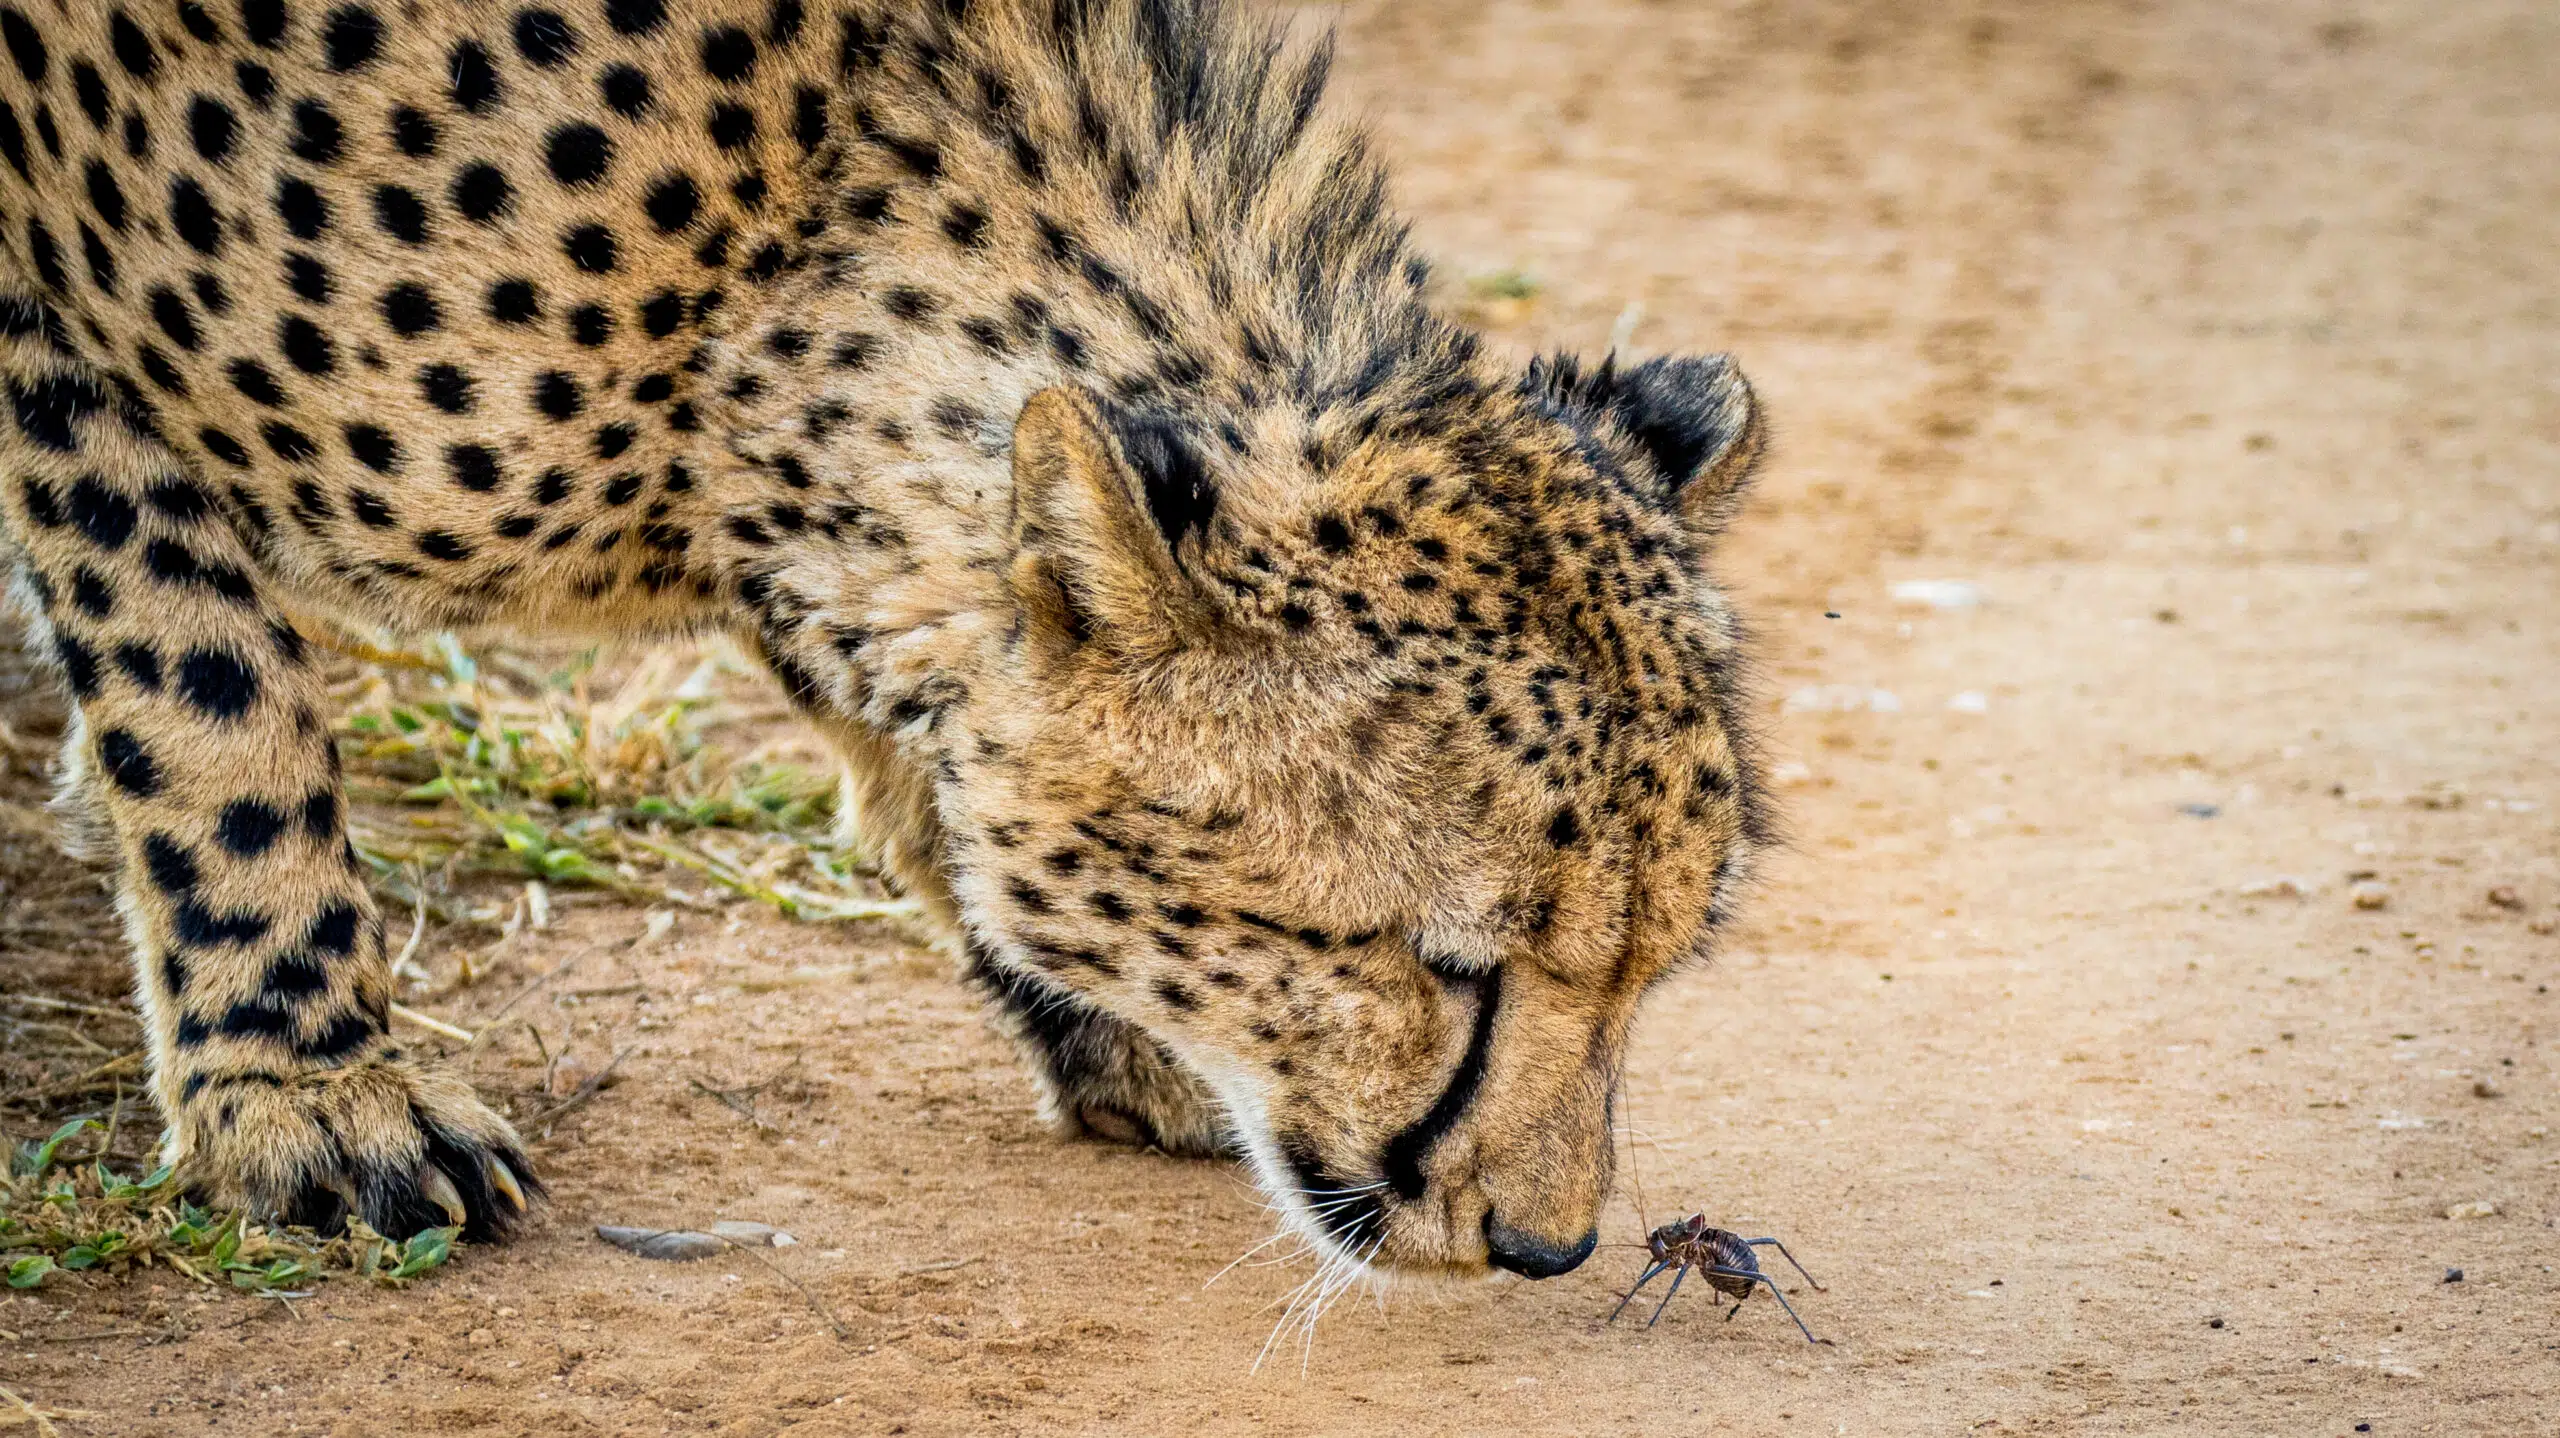 Cheetah sizes up armoured ground cricket